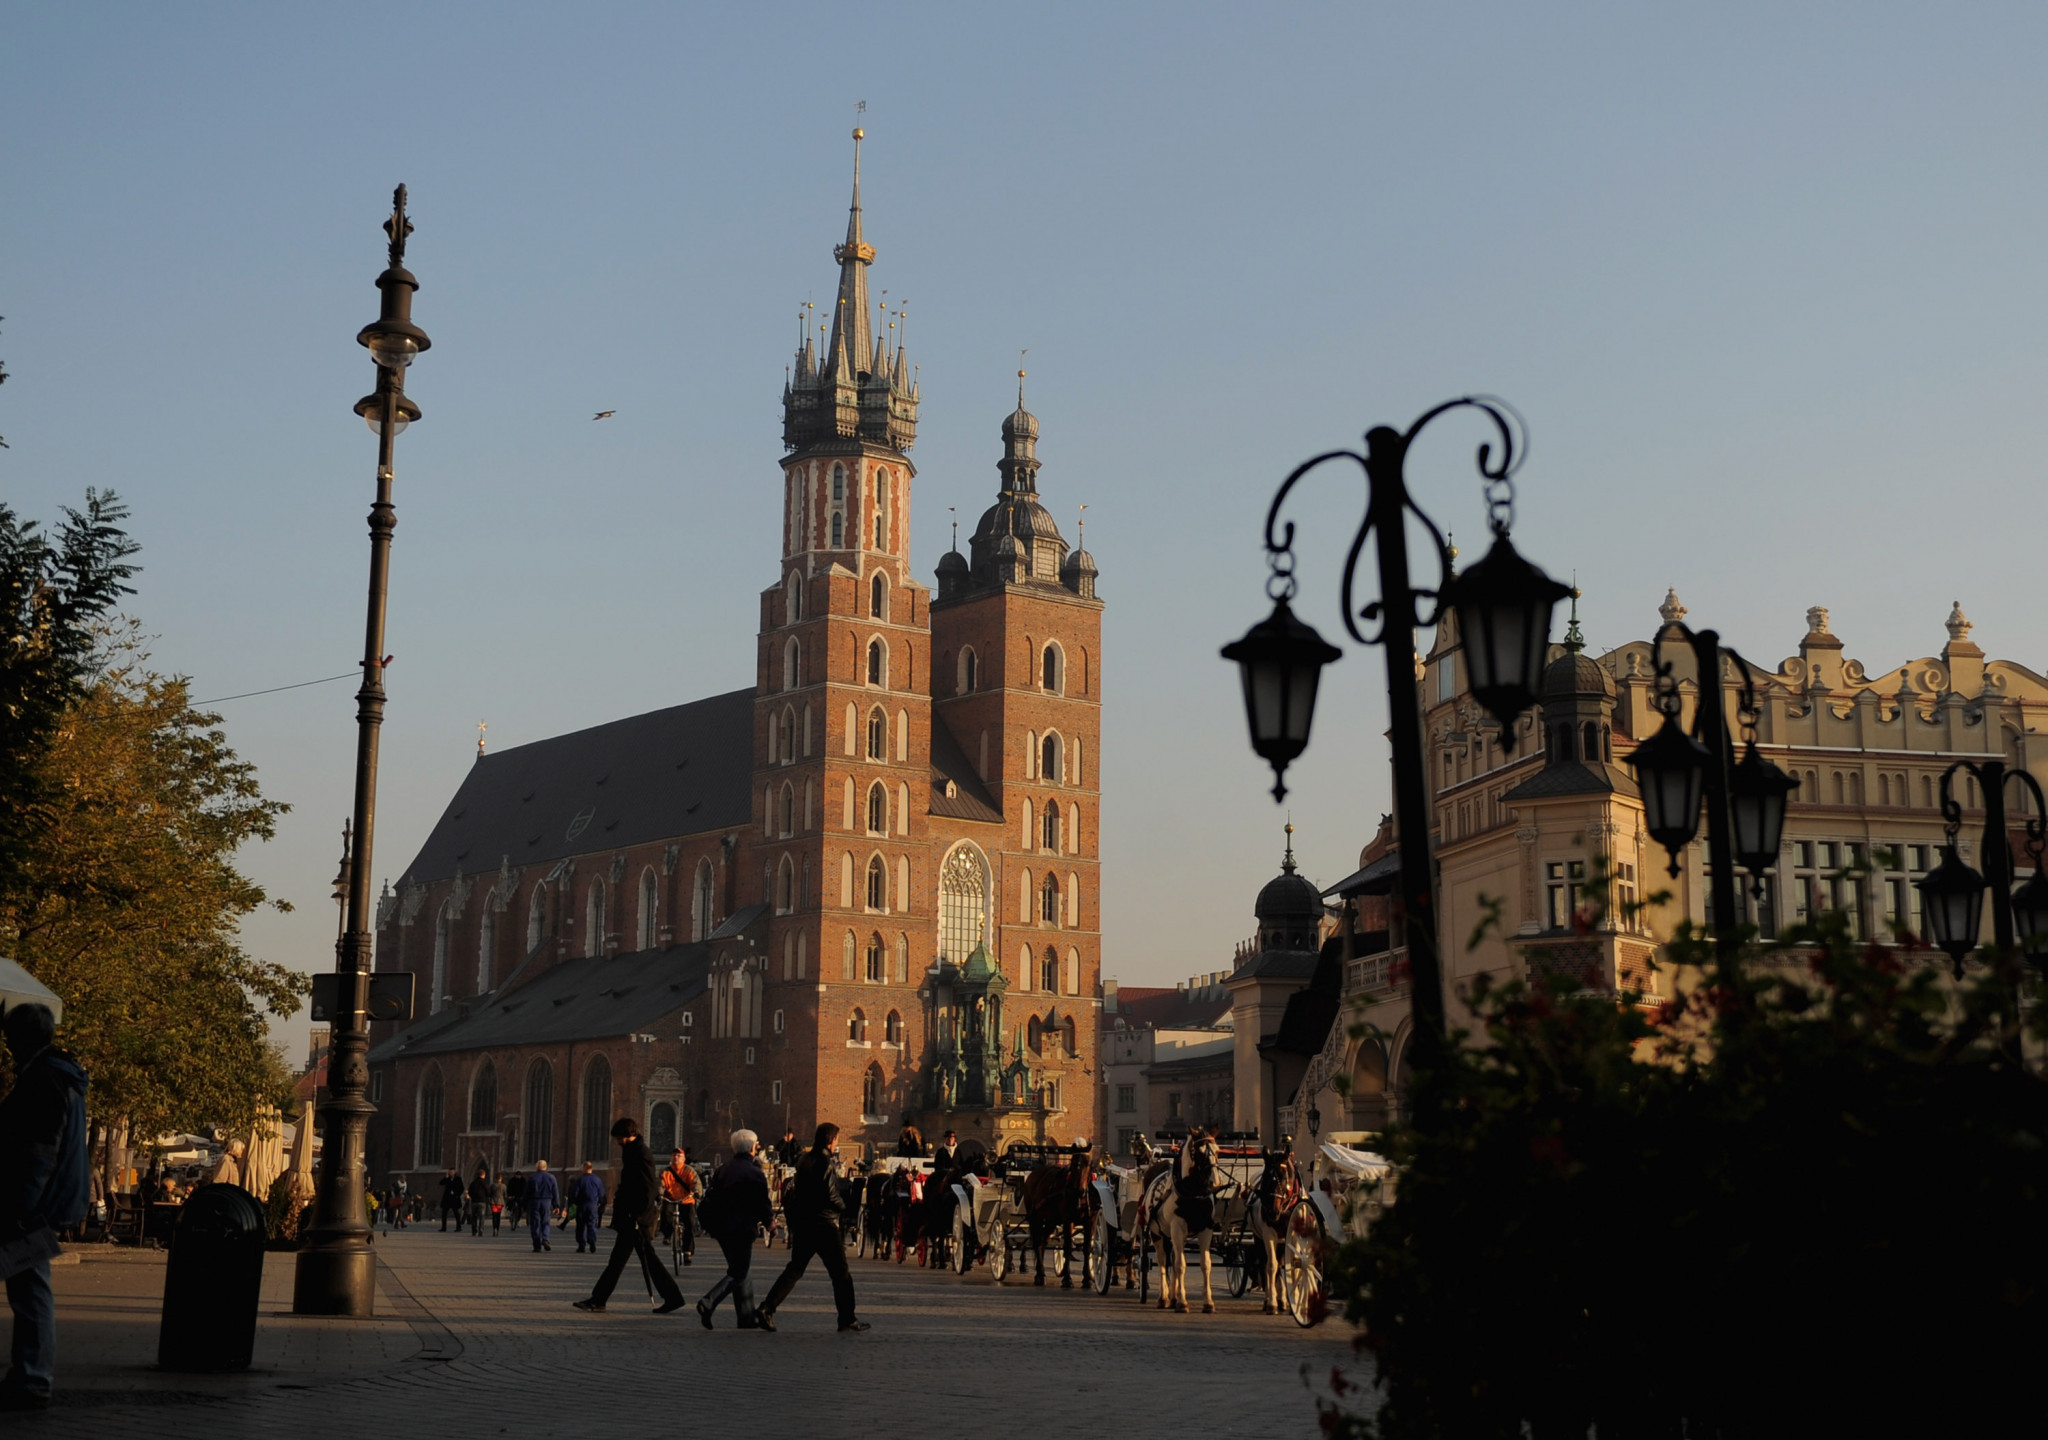 Kraków welcomes Hyatt hotel chain prior to 2023 European Games